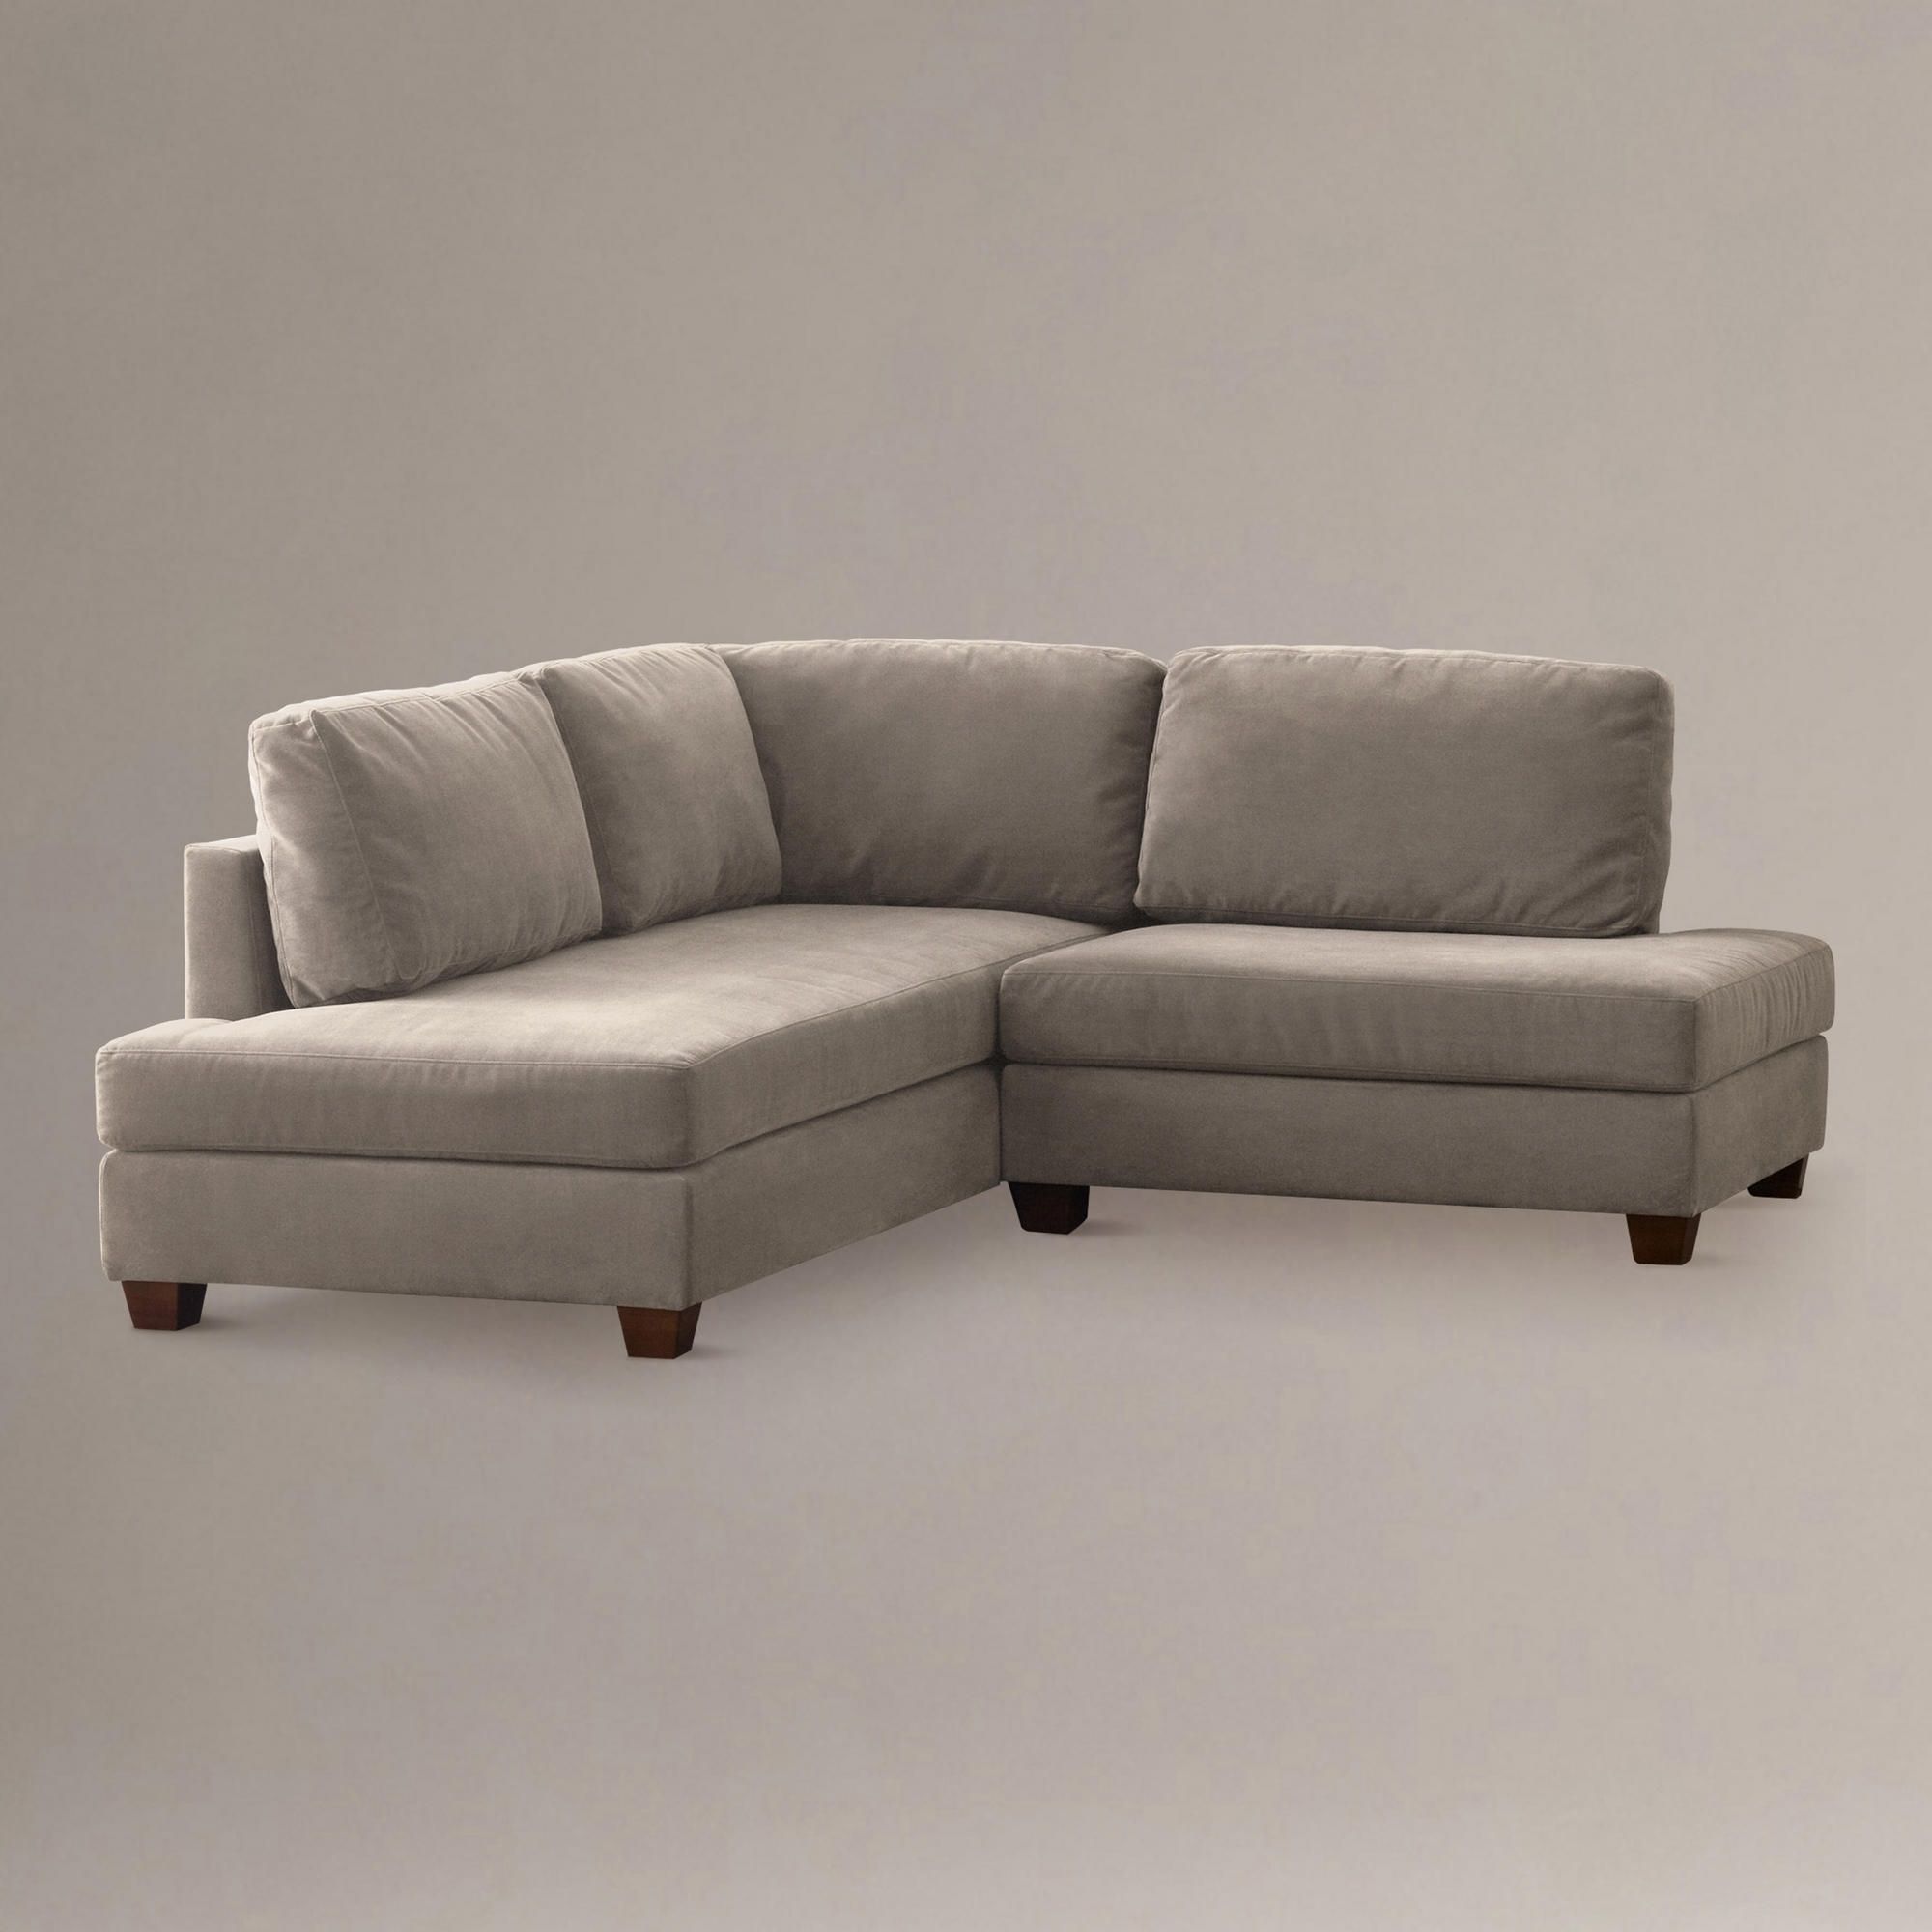 Favorite Armless Sectional Sofas Regarding Amazing Armless Sectional Sofas Small Spaces – Mediasupload (View 3 of 15)